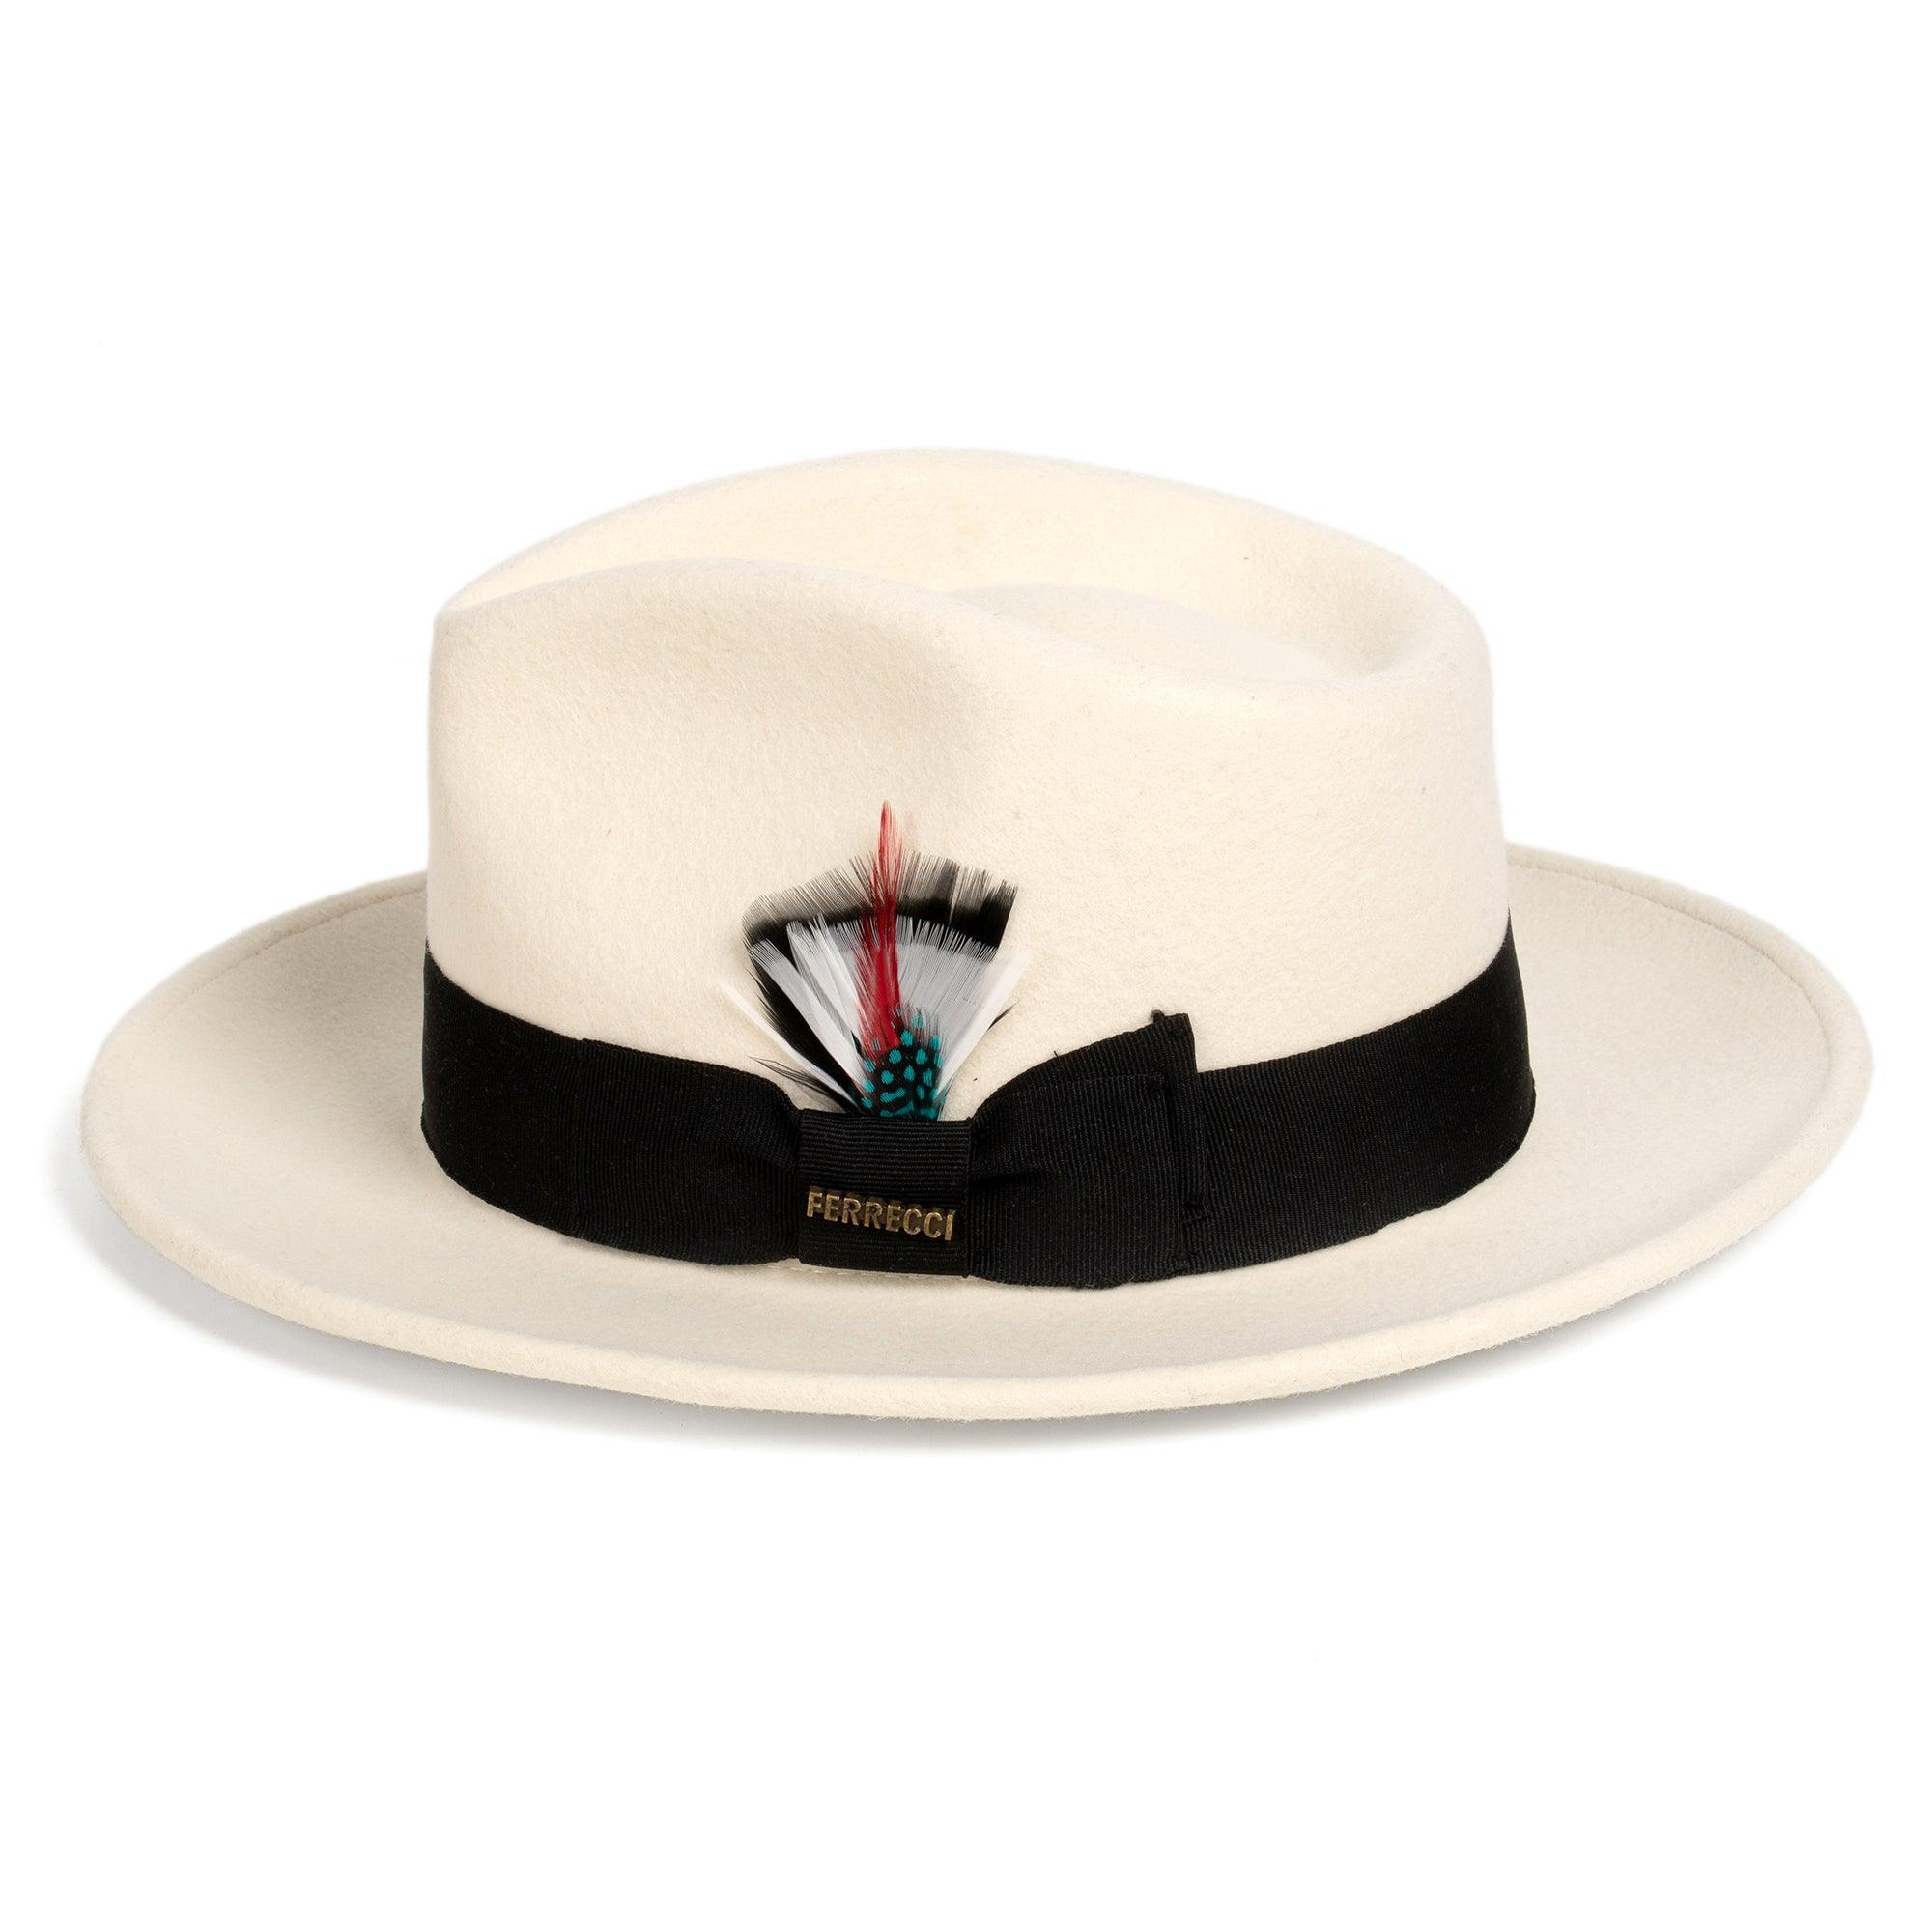 Ferrecci Crushable Wool Fedora Hat Perfect Travel Companion